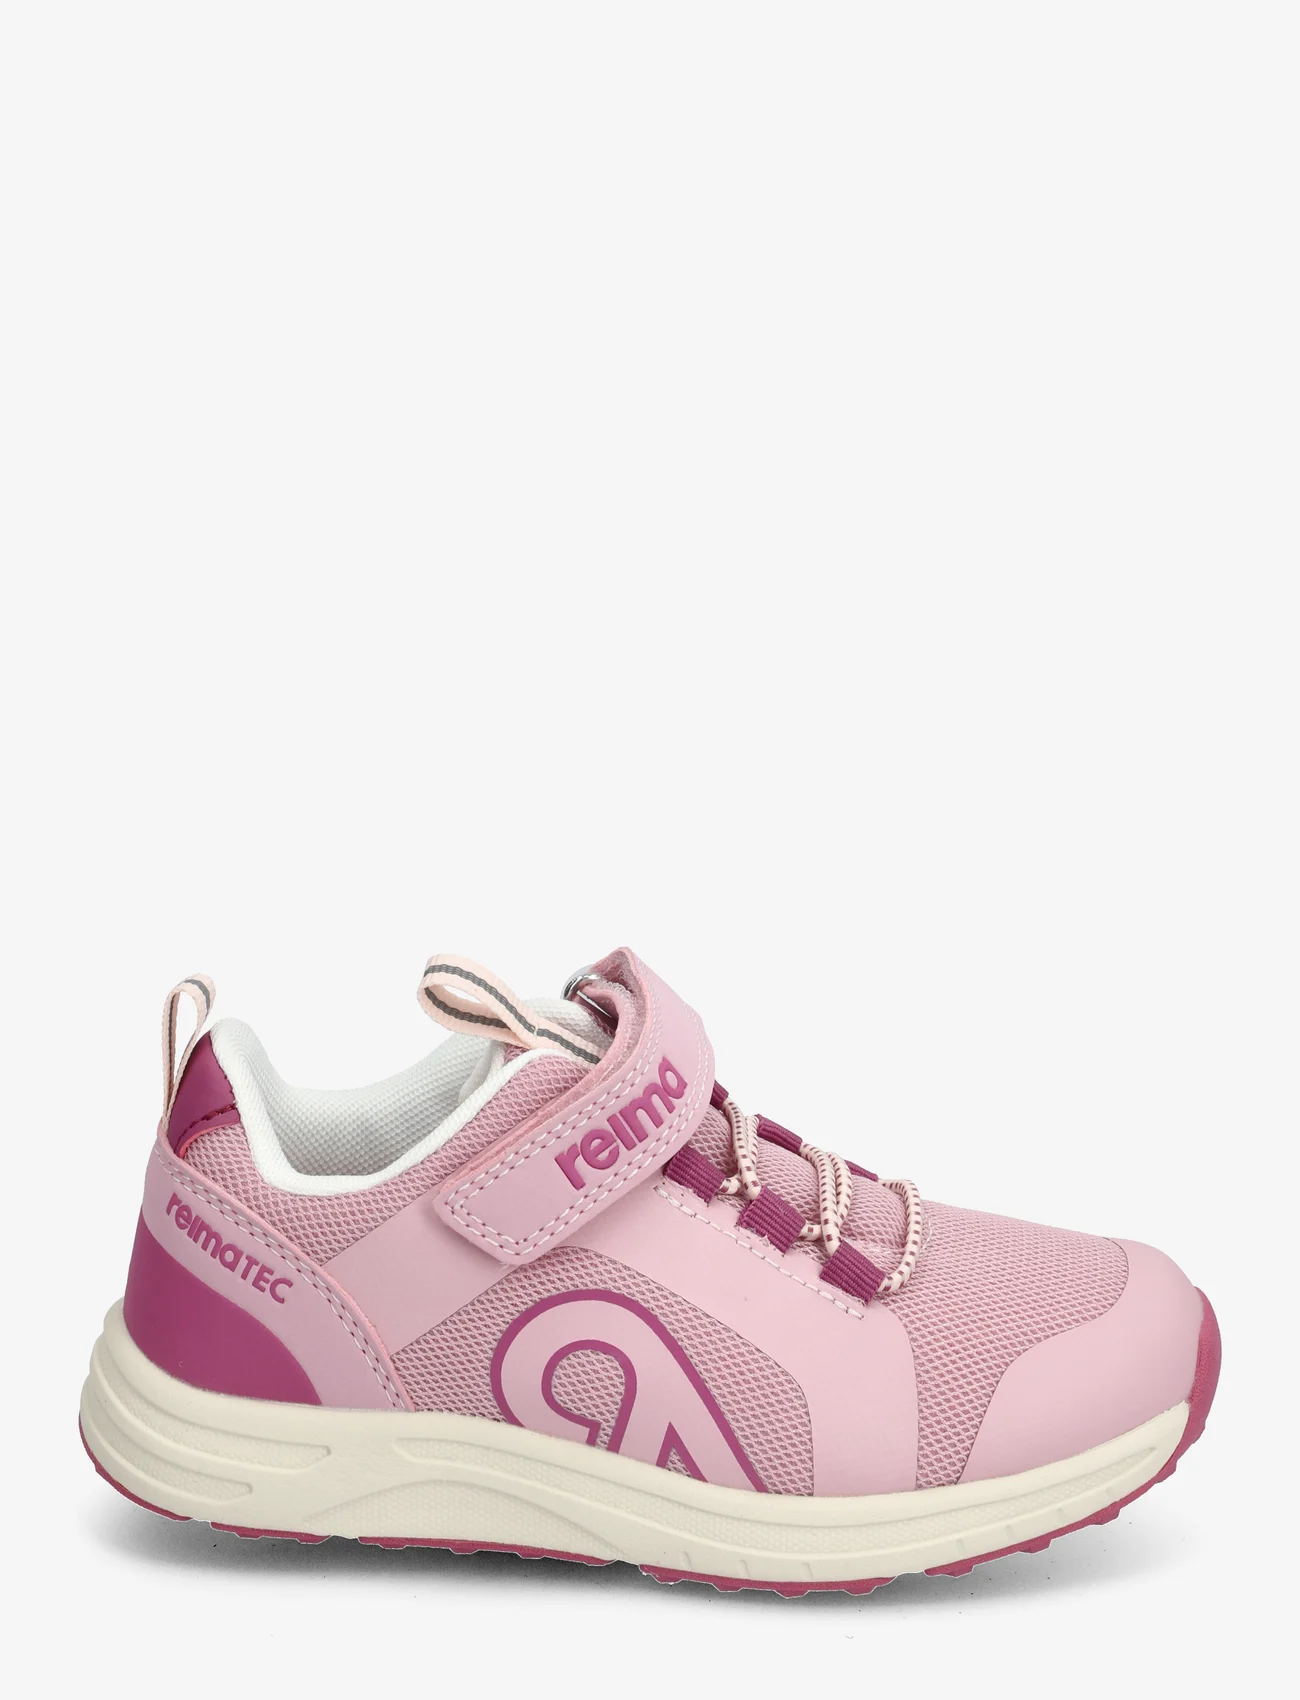 Reima - Reimatec shoes, Enkka - lapset - grey pink - 1